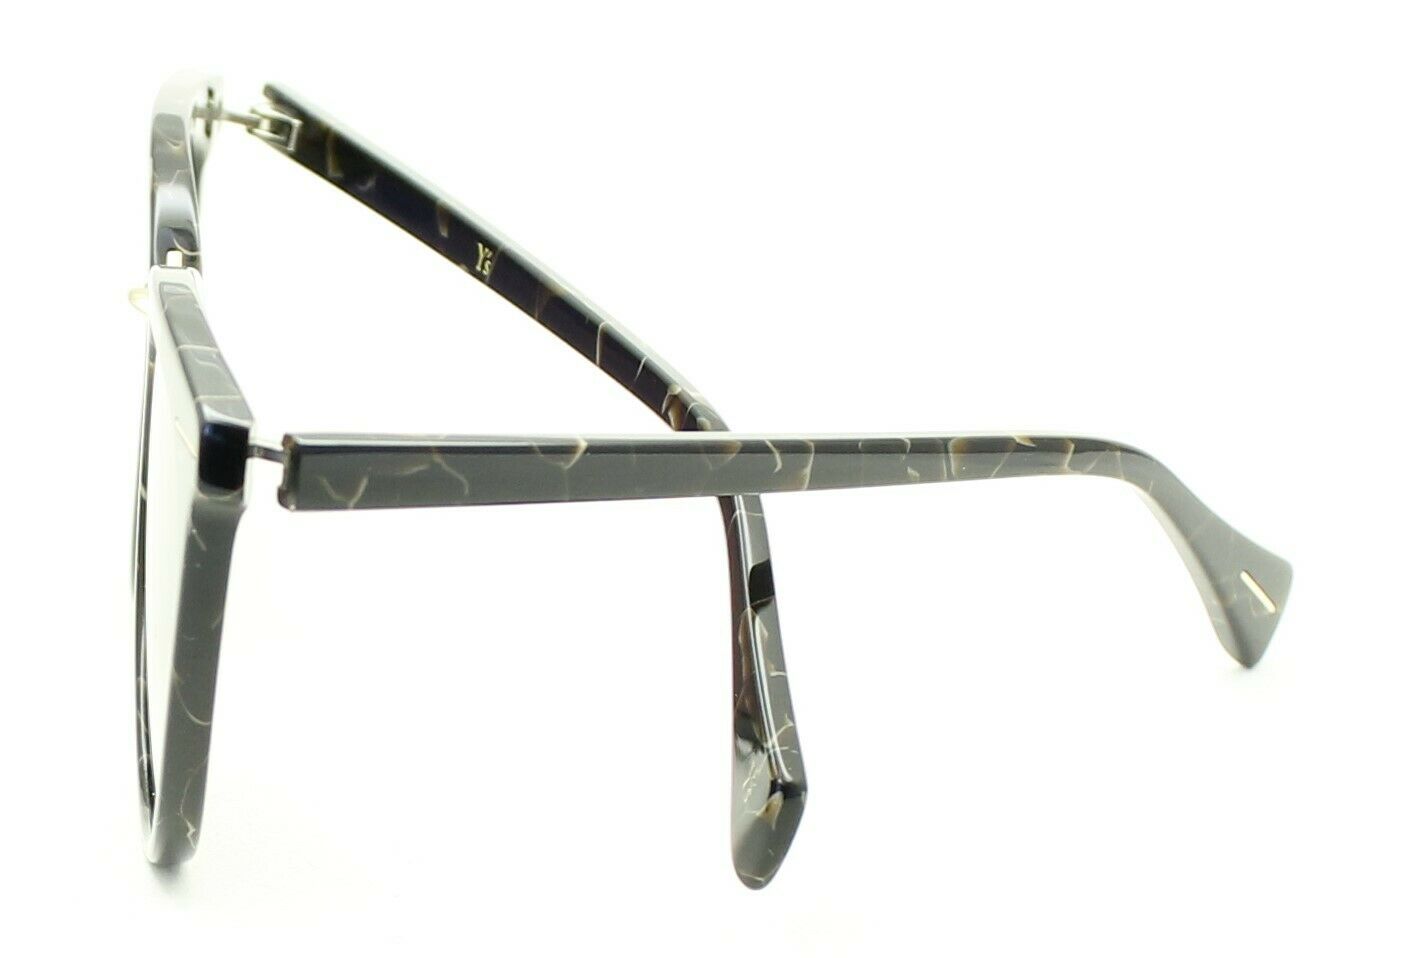 YOHJI YAMAMOTO YS5006 134 51mm Brown Sunglasses Eyewear Shades Frames - France